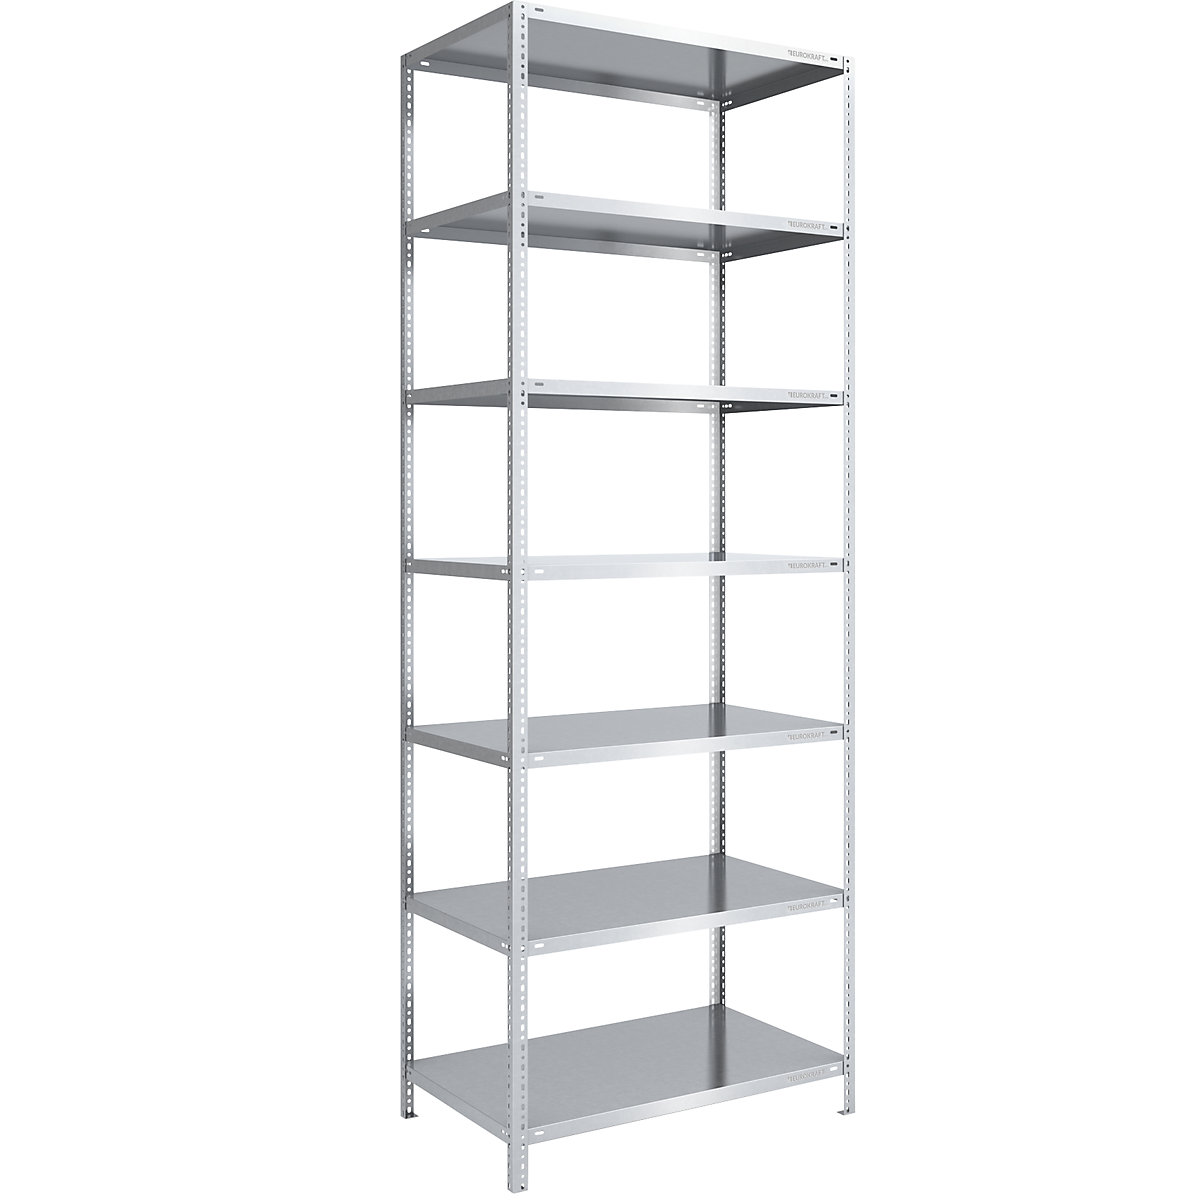 Bolt-together shelf unit, light duty, zinc plated – eurokraft pro, shelf unit height 3000 mm, shelf width 1000 mm, depth 800 mm, standard shelf unit-8